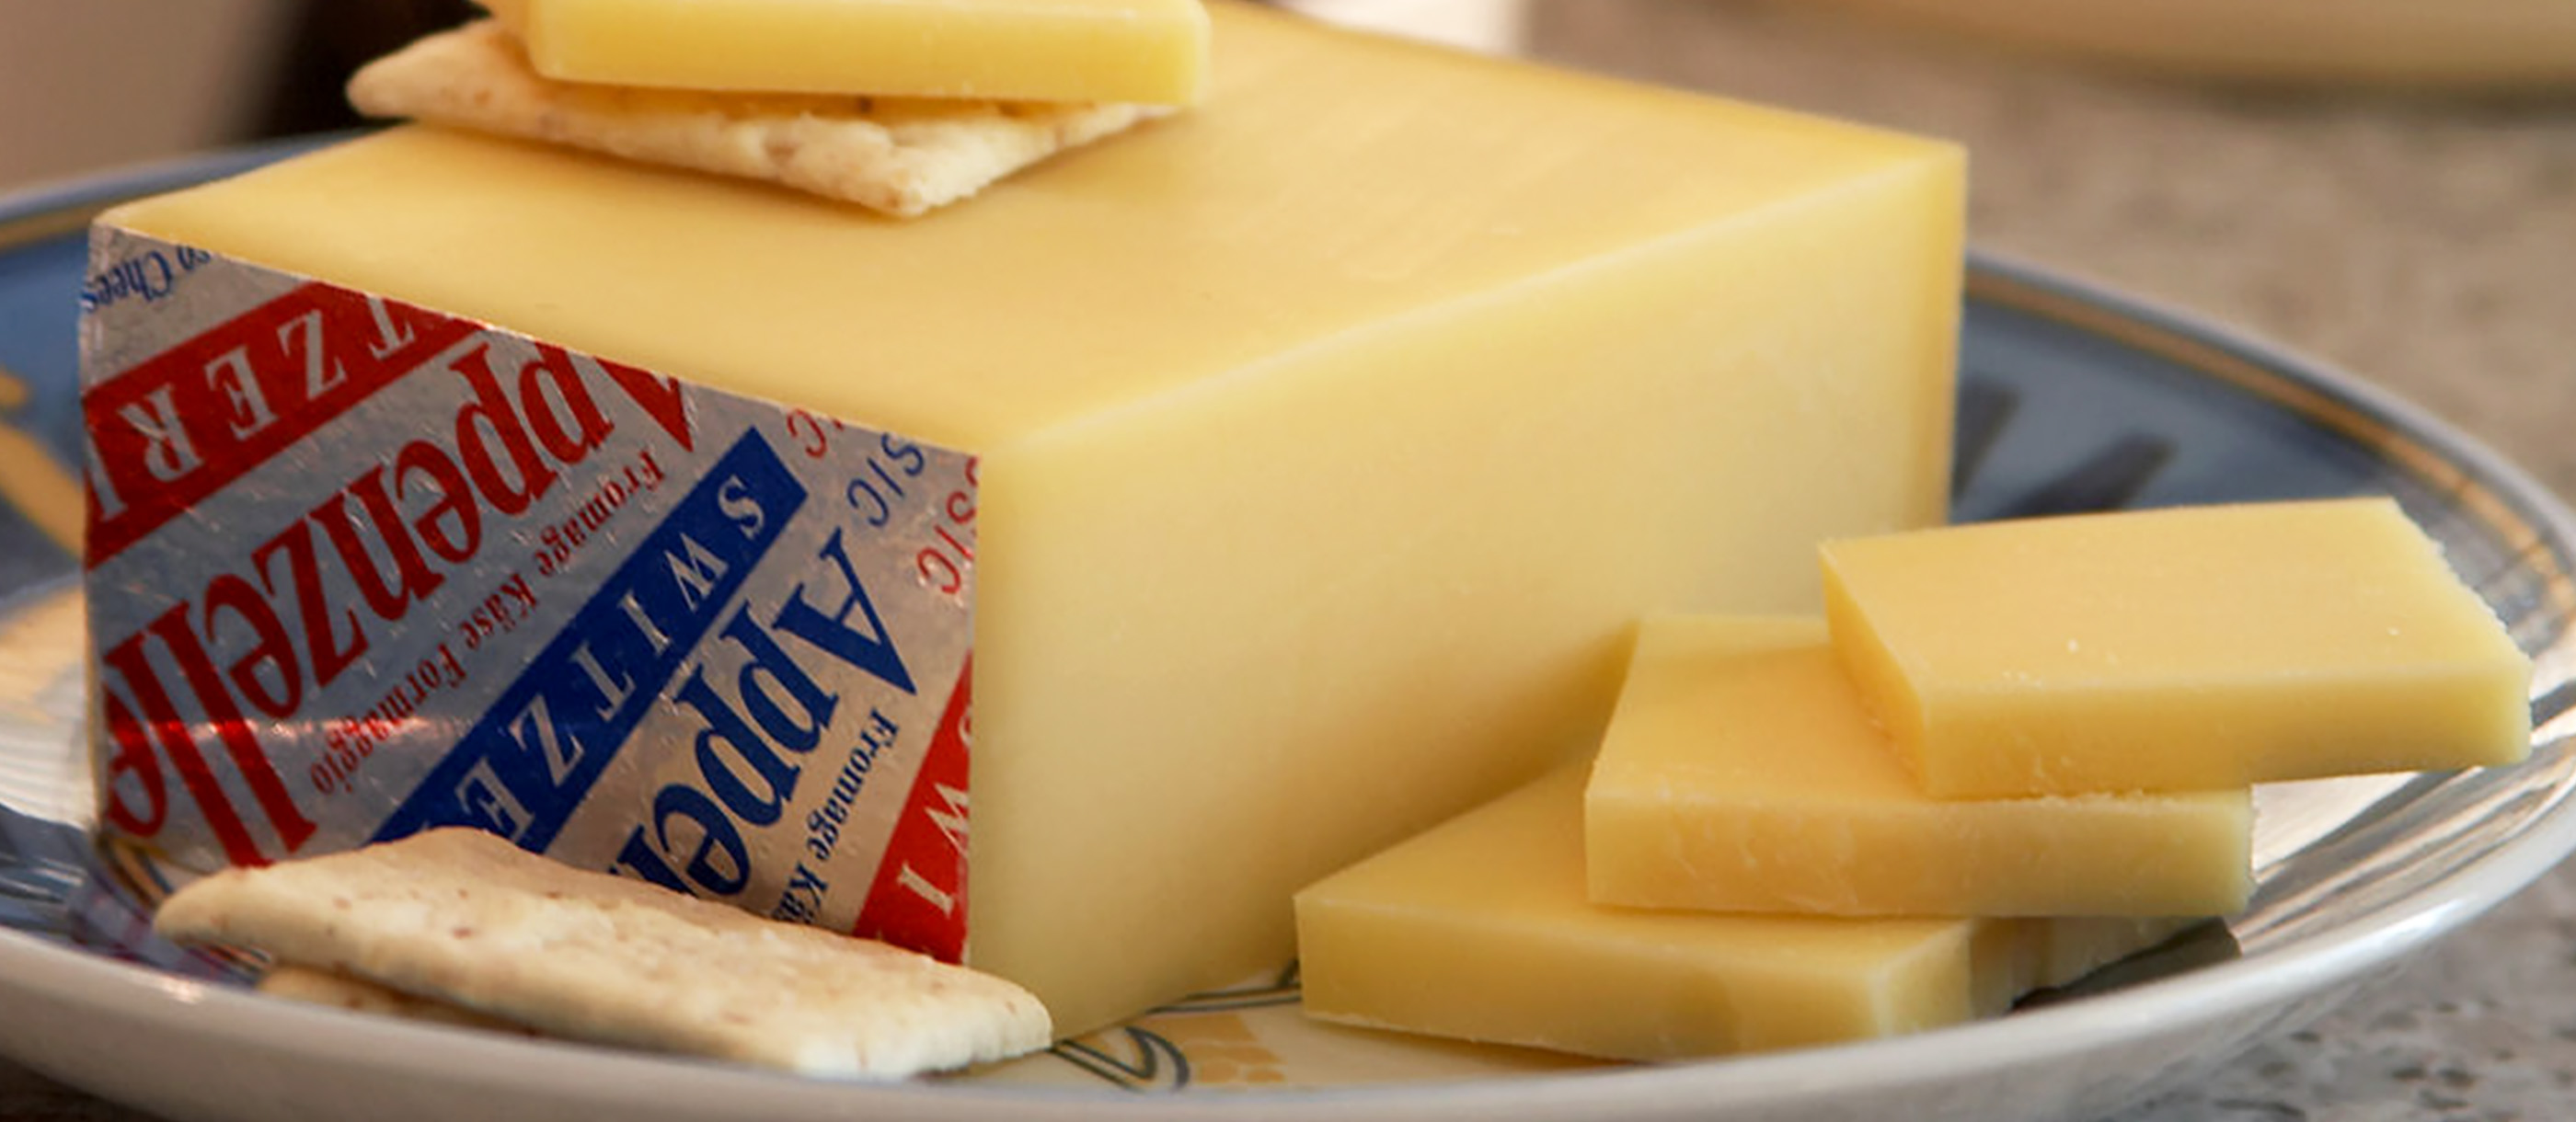 Appenzeller | Local Cheese From Appenzell, Switzerland